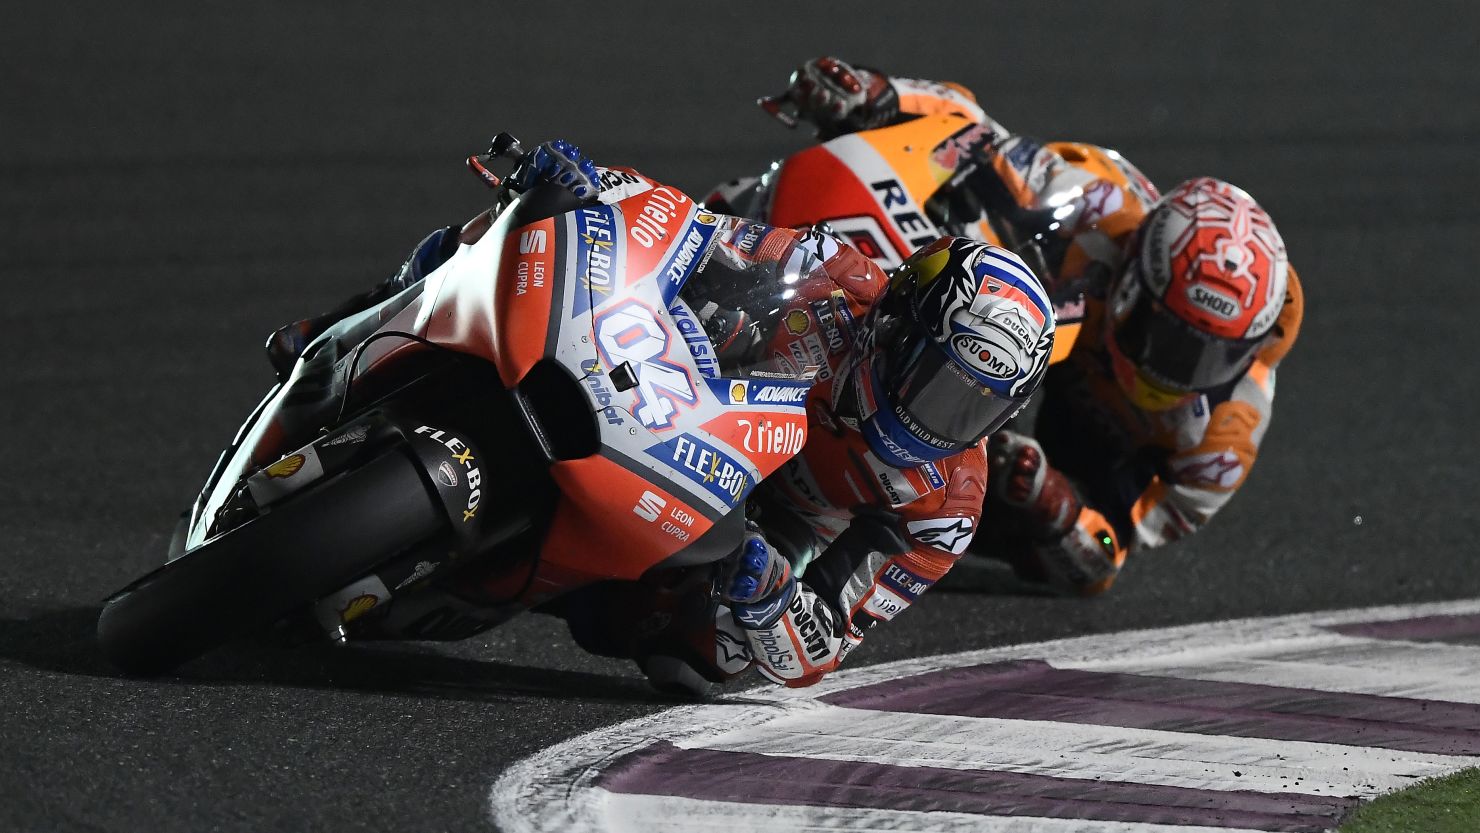 Ducati's Andrea Dovizioso leads Honda's Marc Marquez in a thrilling finale to the MotoGP of Qatar.